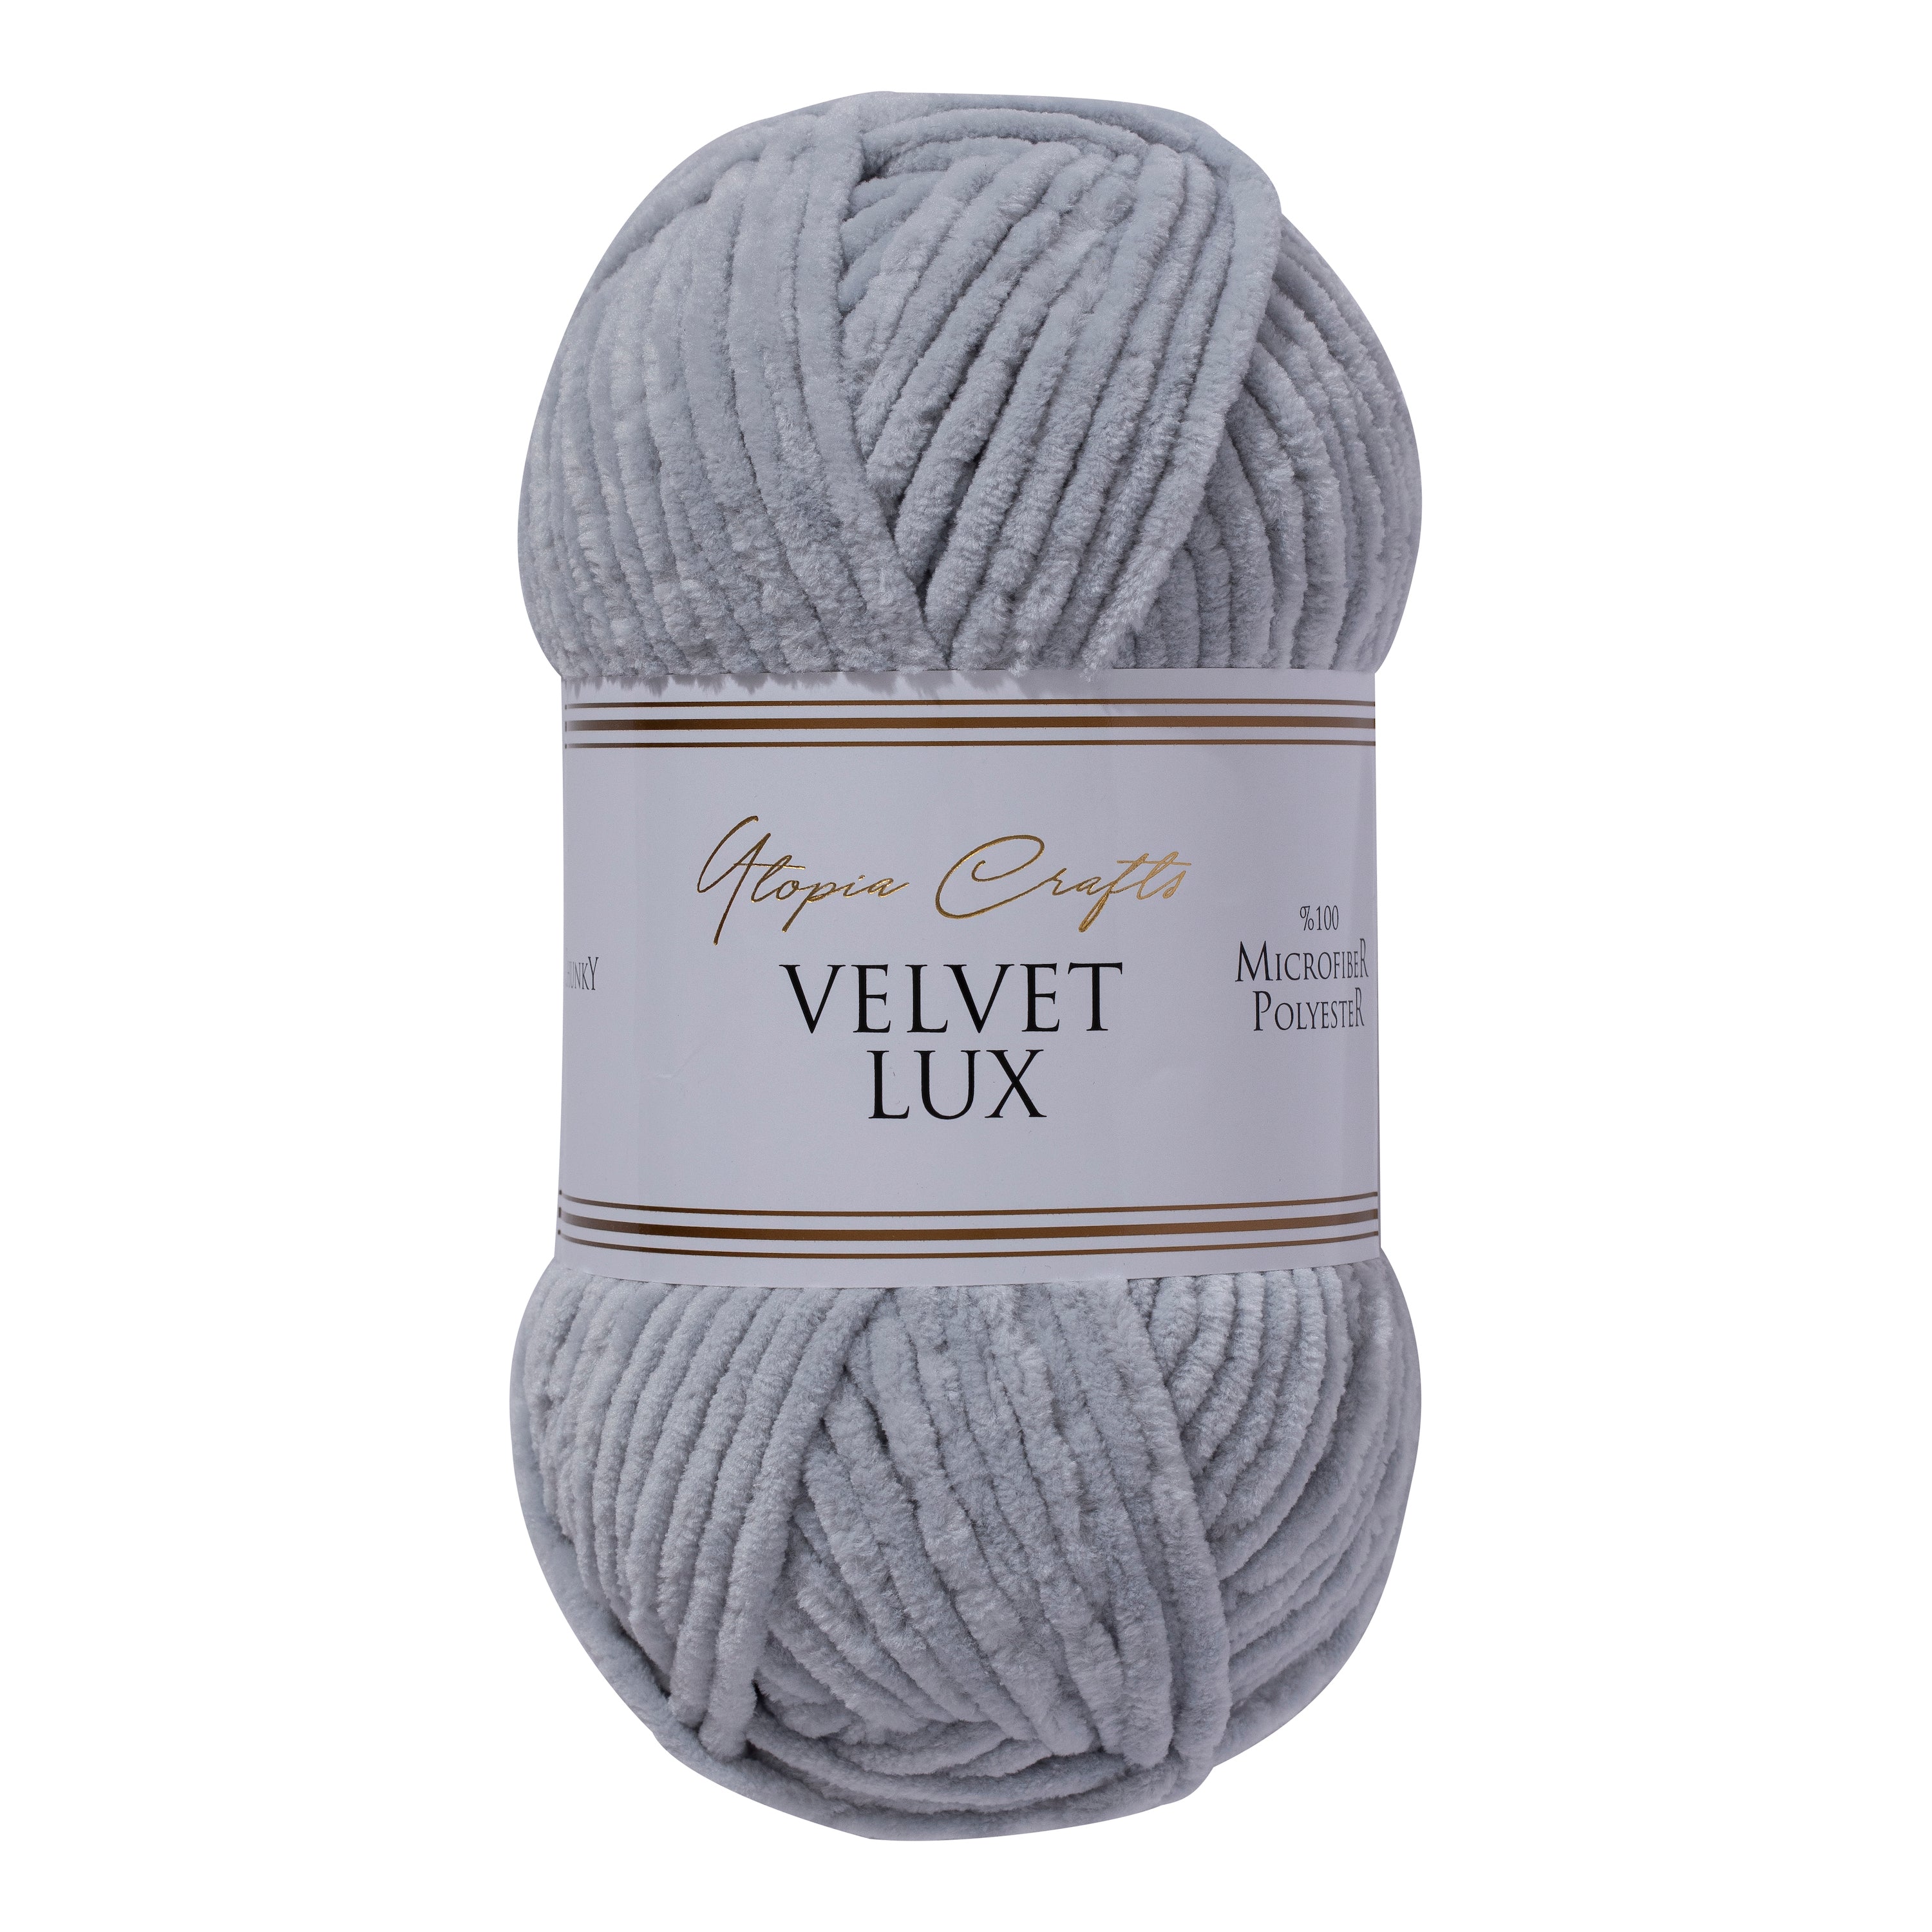 Utopia Crafts Velvet Lux Chenille Super Soft Chunky Yarn for Knitting and Crochet, 100g - 110m (Grey)